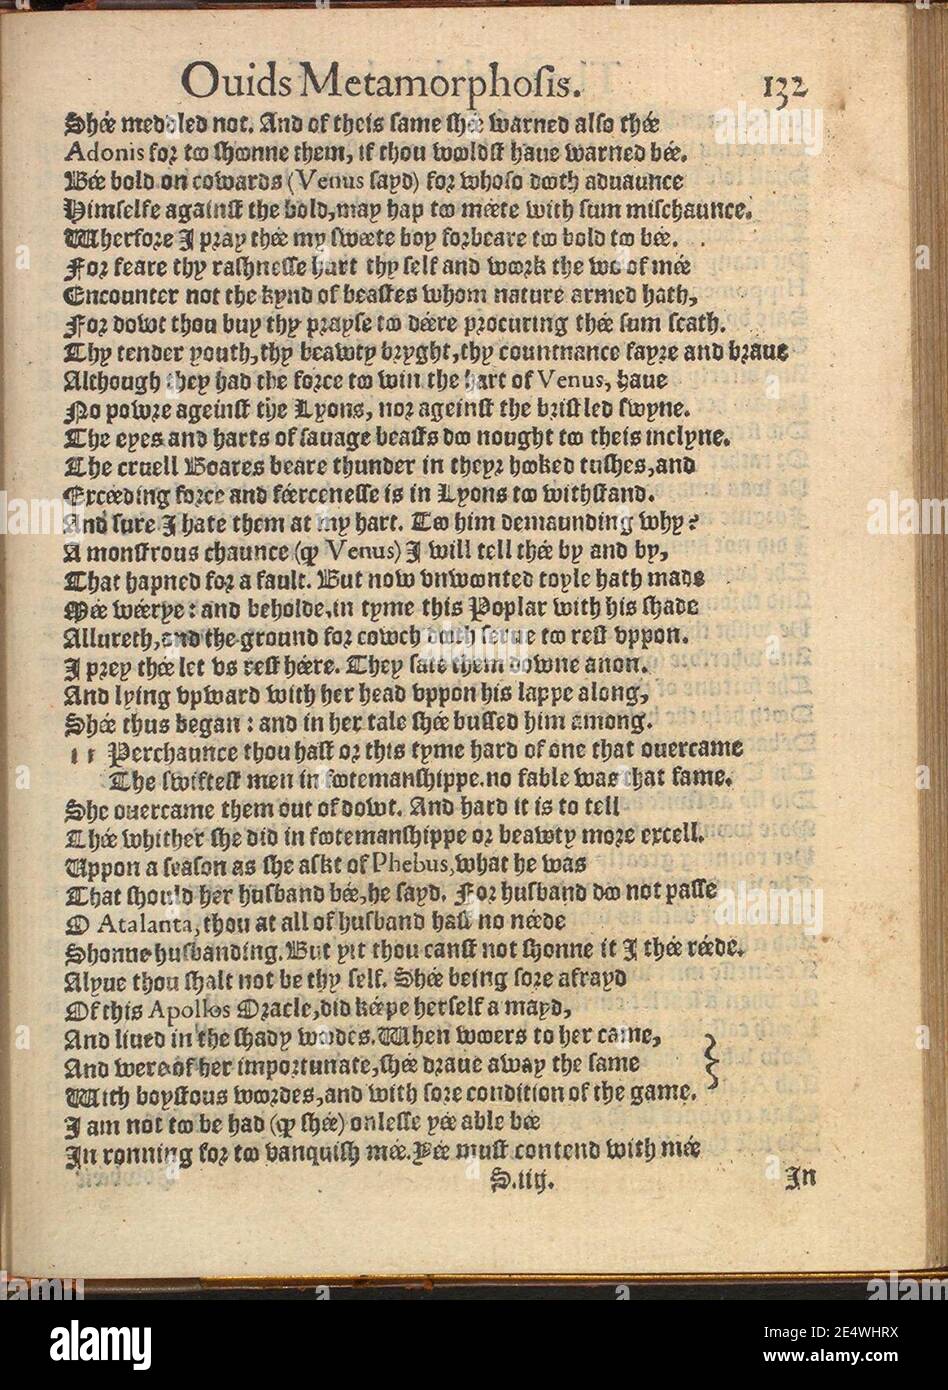 Metamorphosen (Ovid, 1567) - 0287. Stockfoto